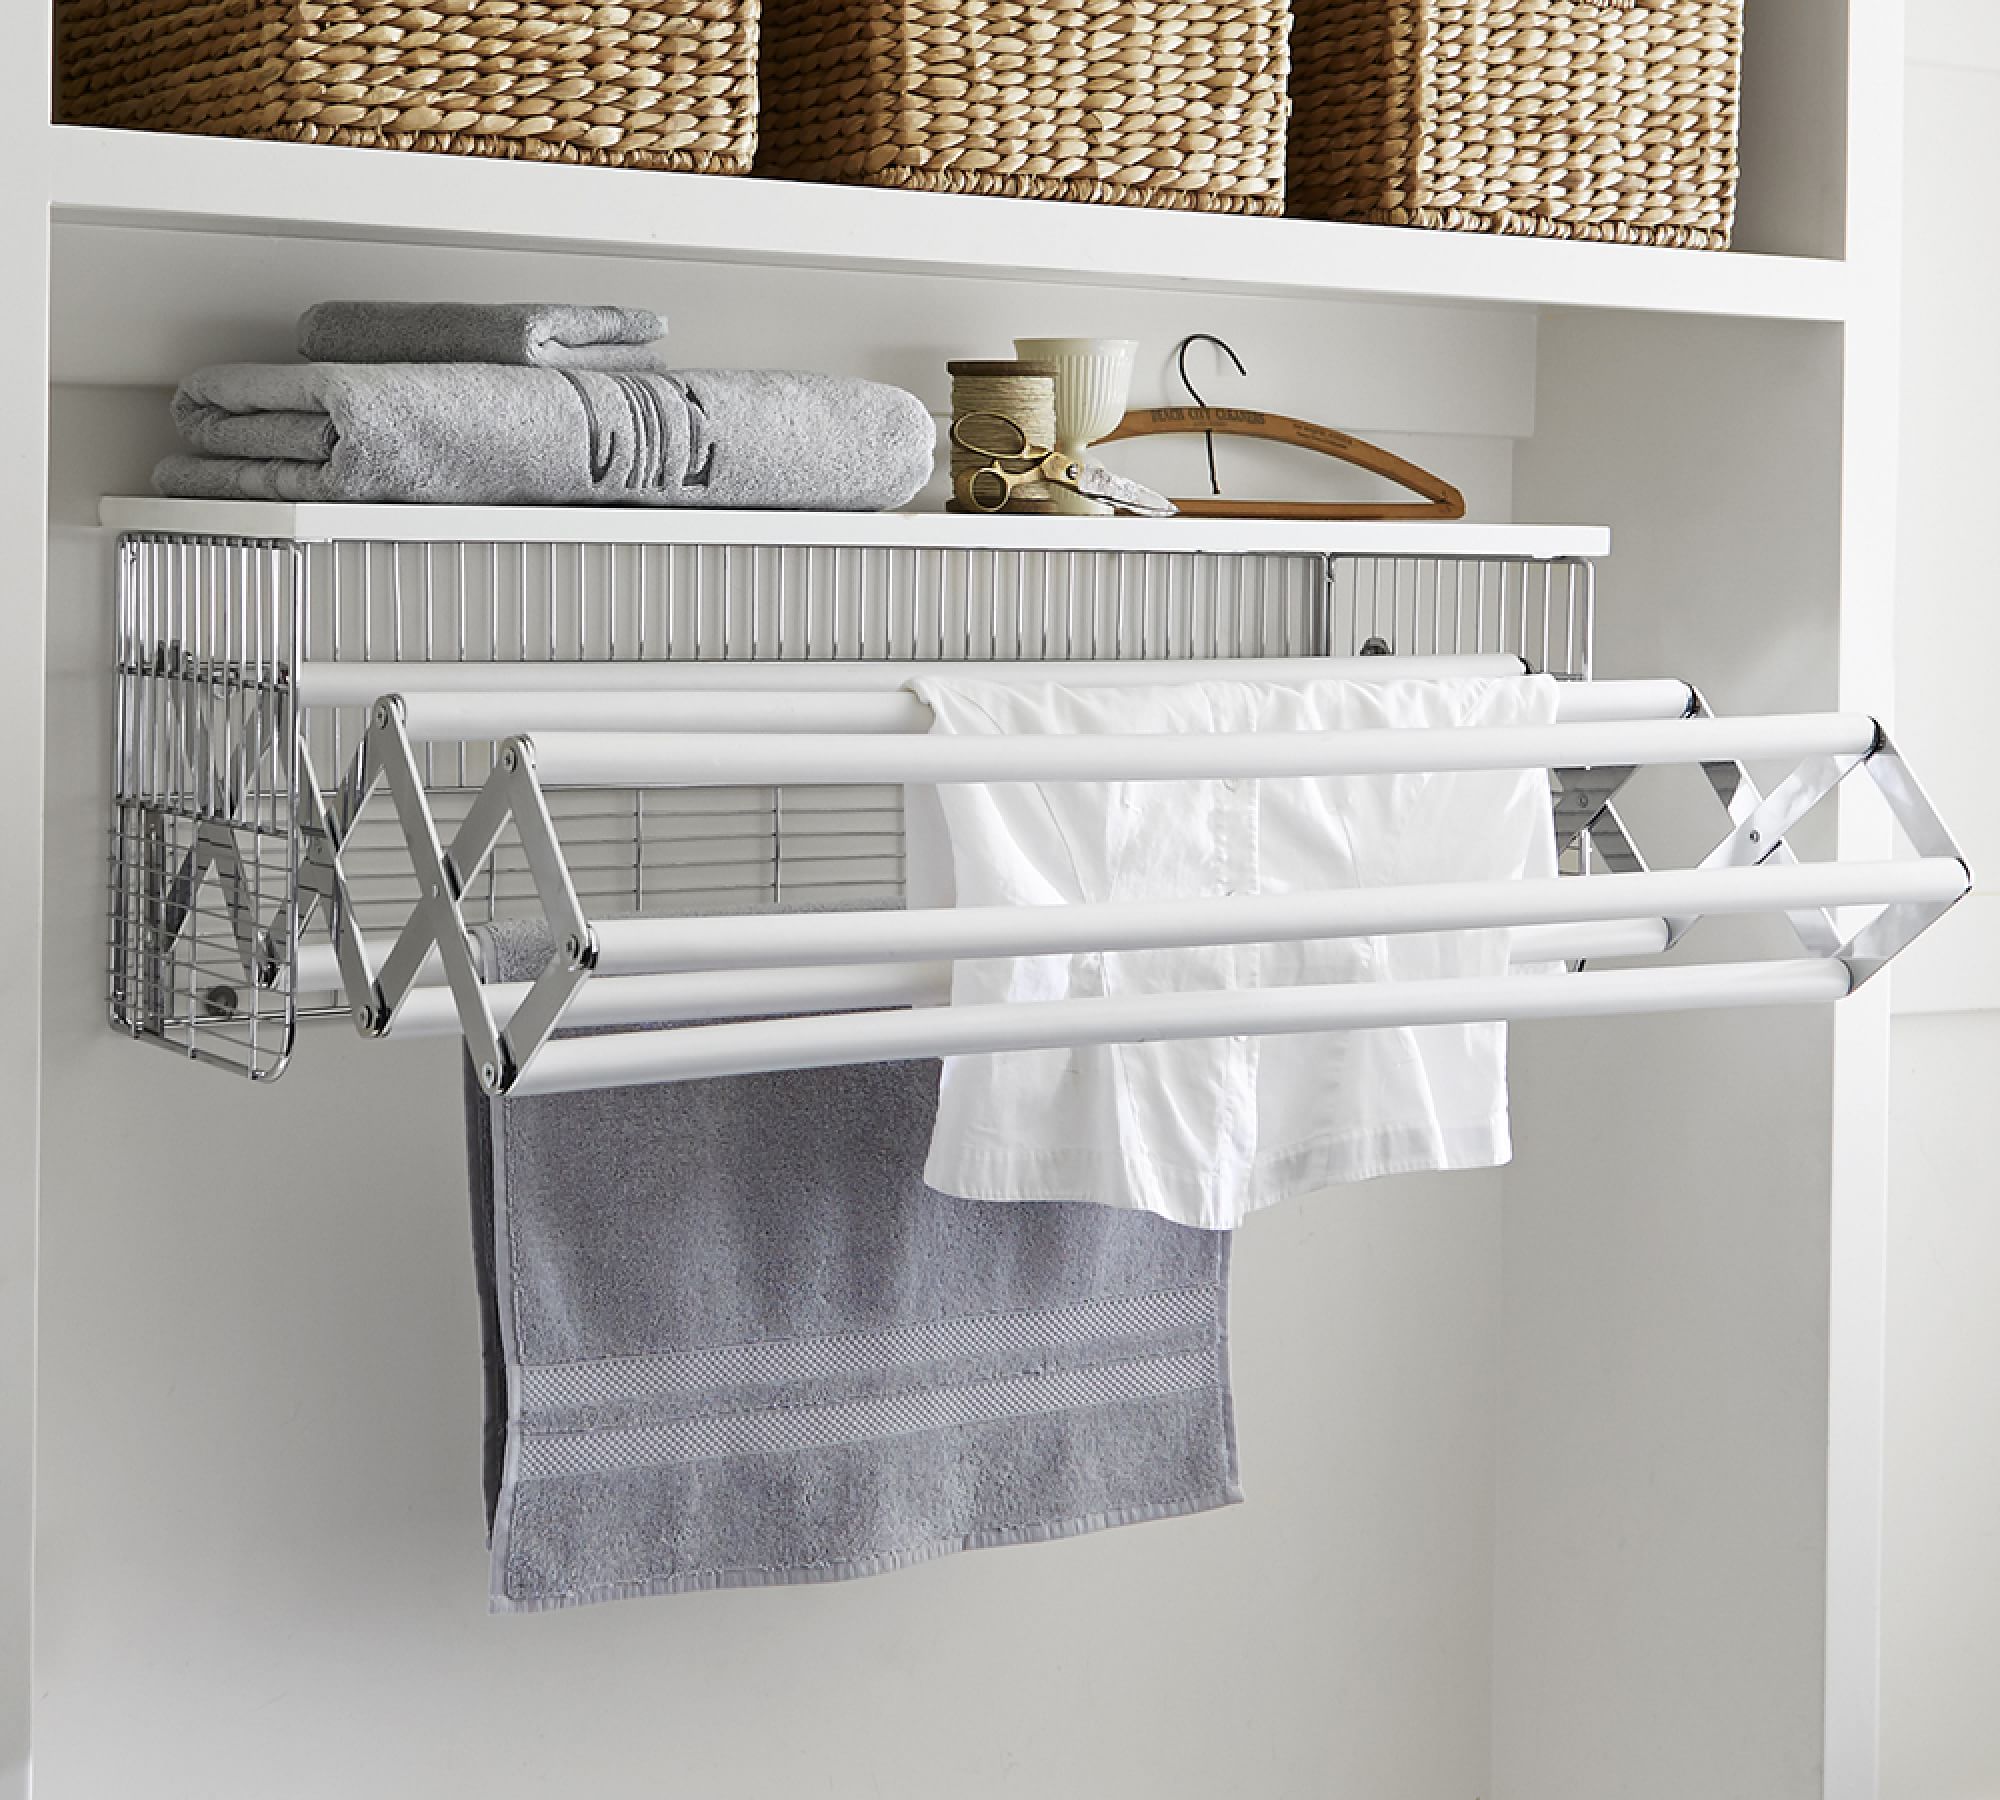 https://assets.pbimgs.com/pbimgs/ab/images/dp/wcm/202209/1082/wall-mounted-laundry-drying-rack-xl.jpg